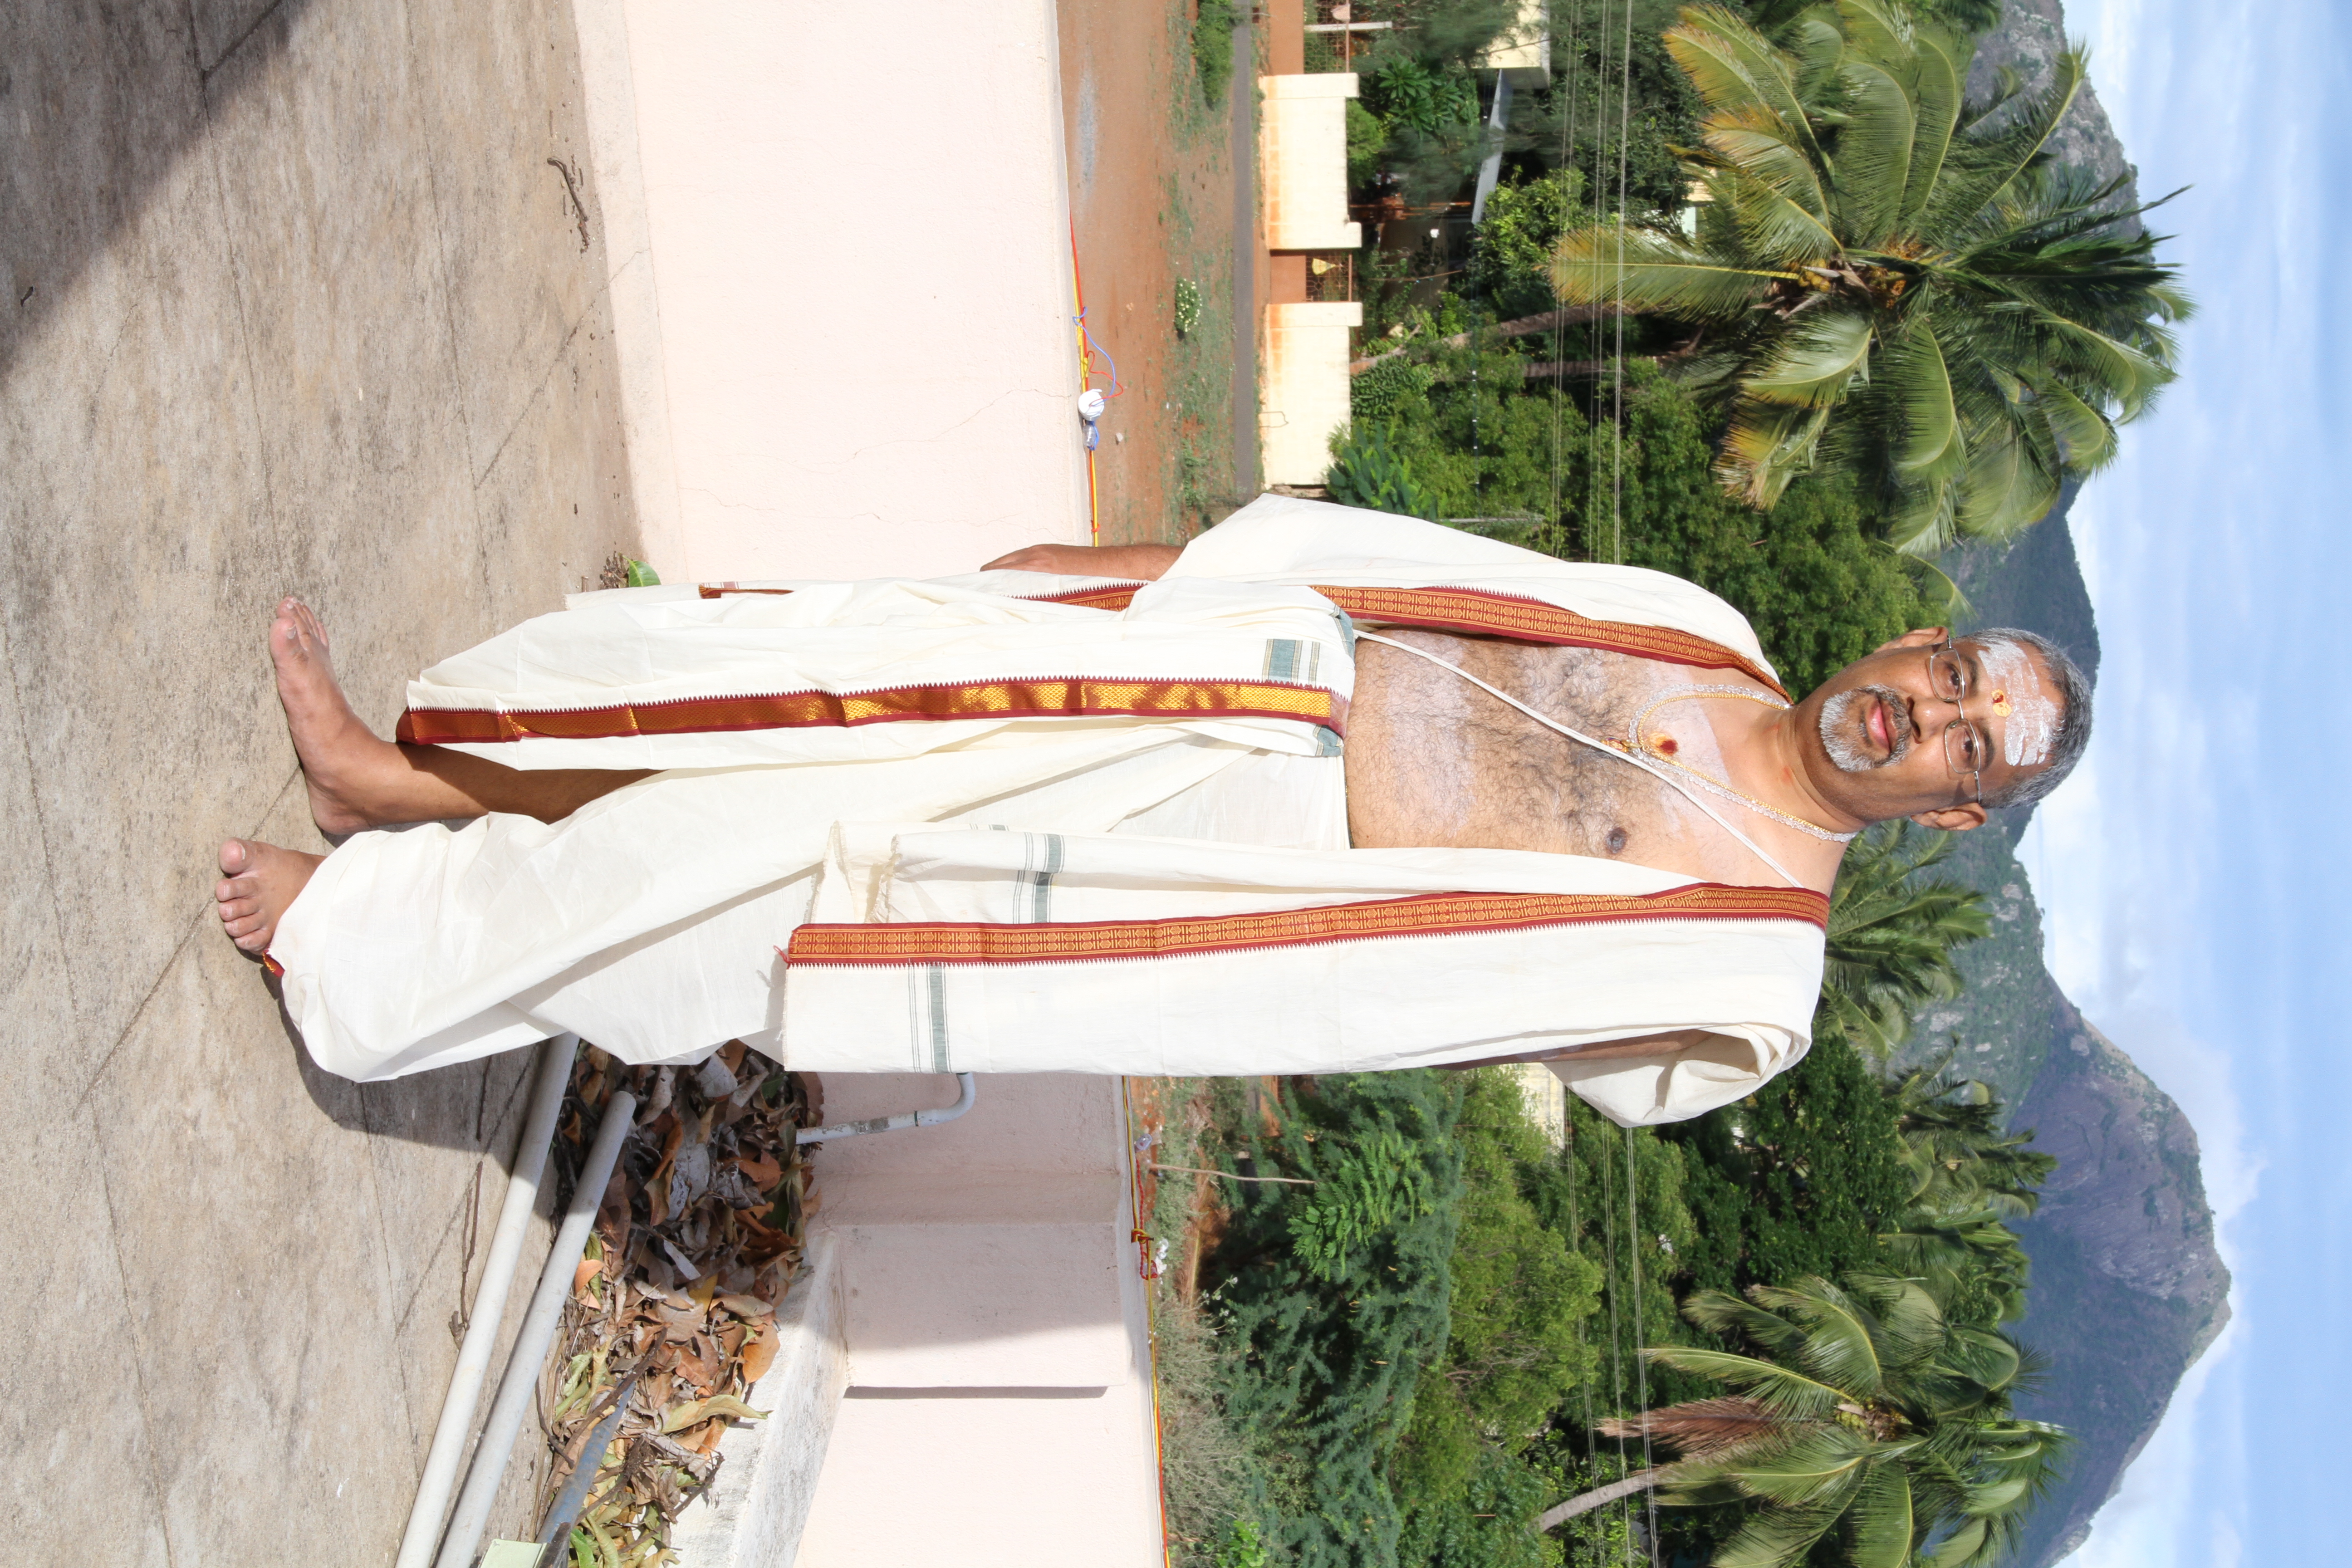 Ramdas Iyer in a typical Palakkad Iyer attire